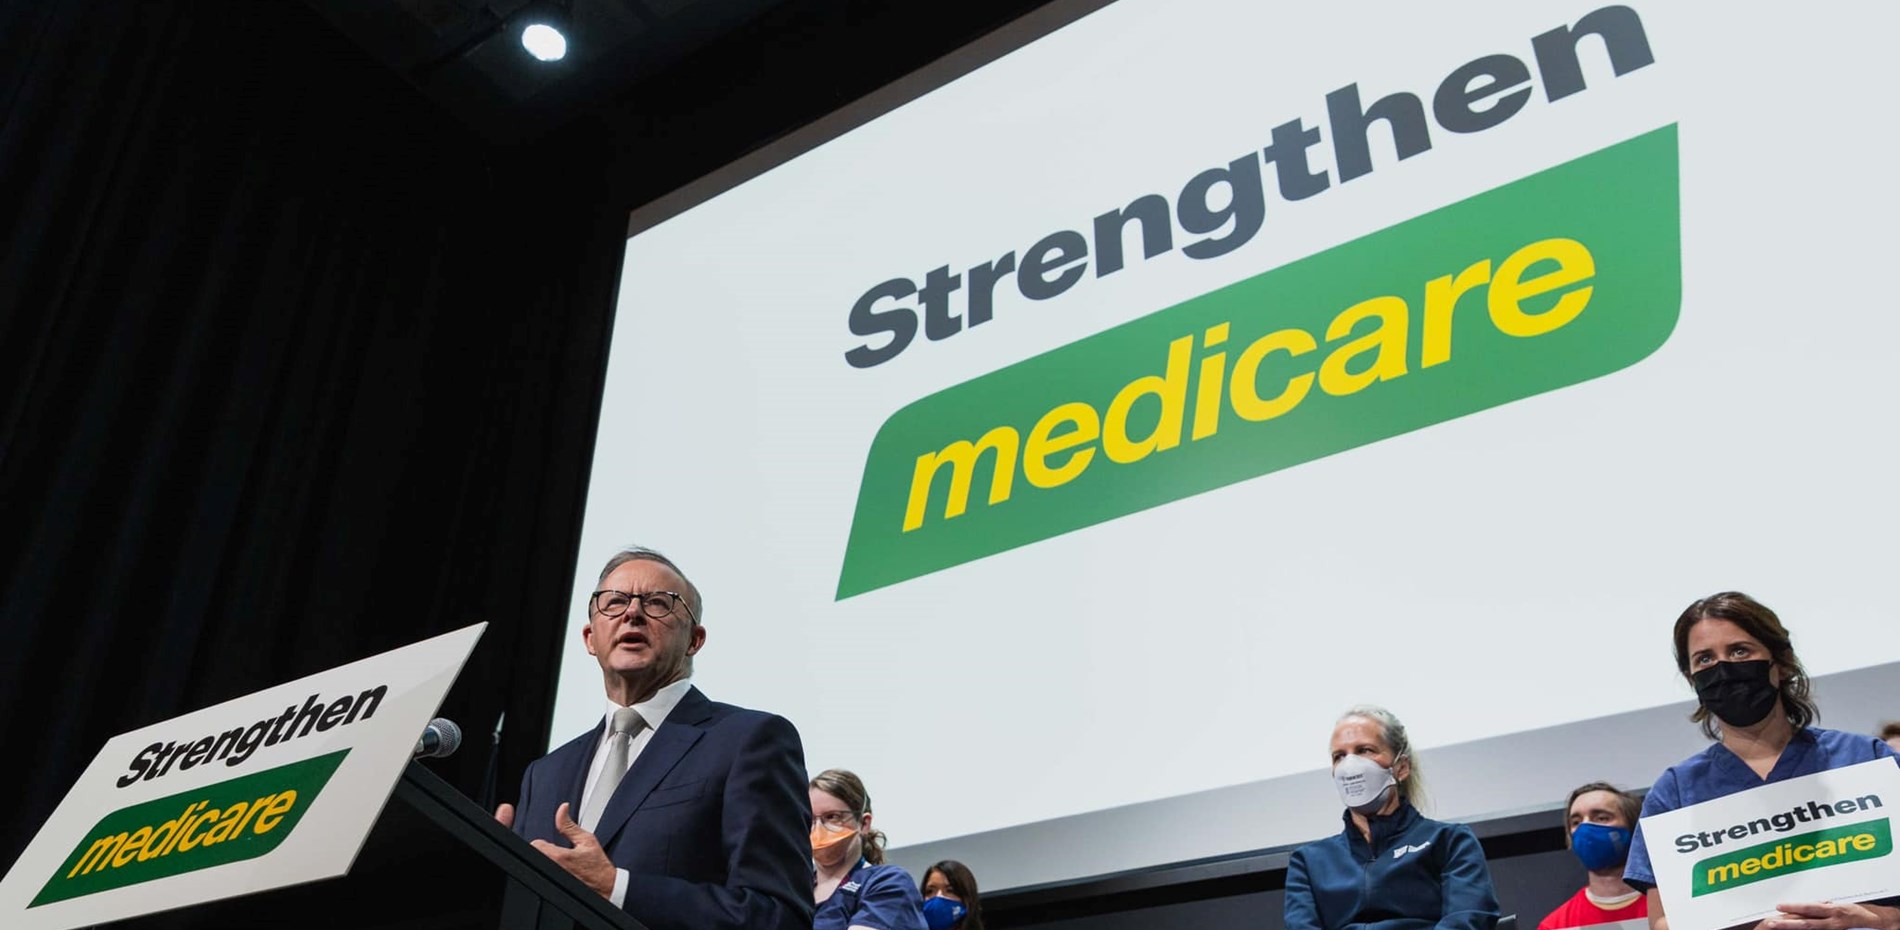 Strengthening Medicare Main Image